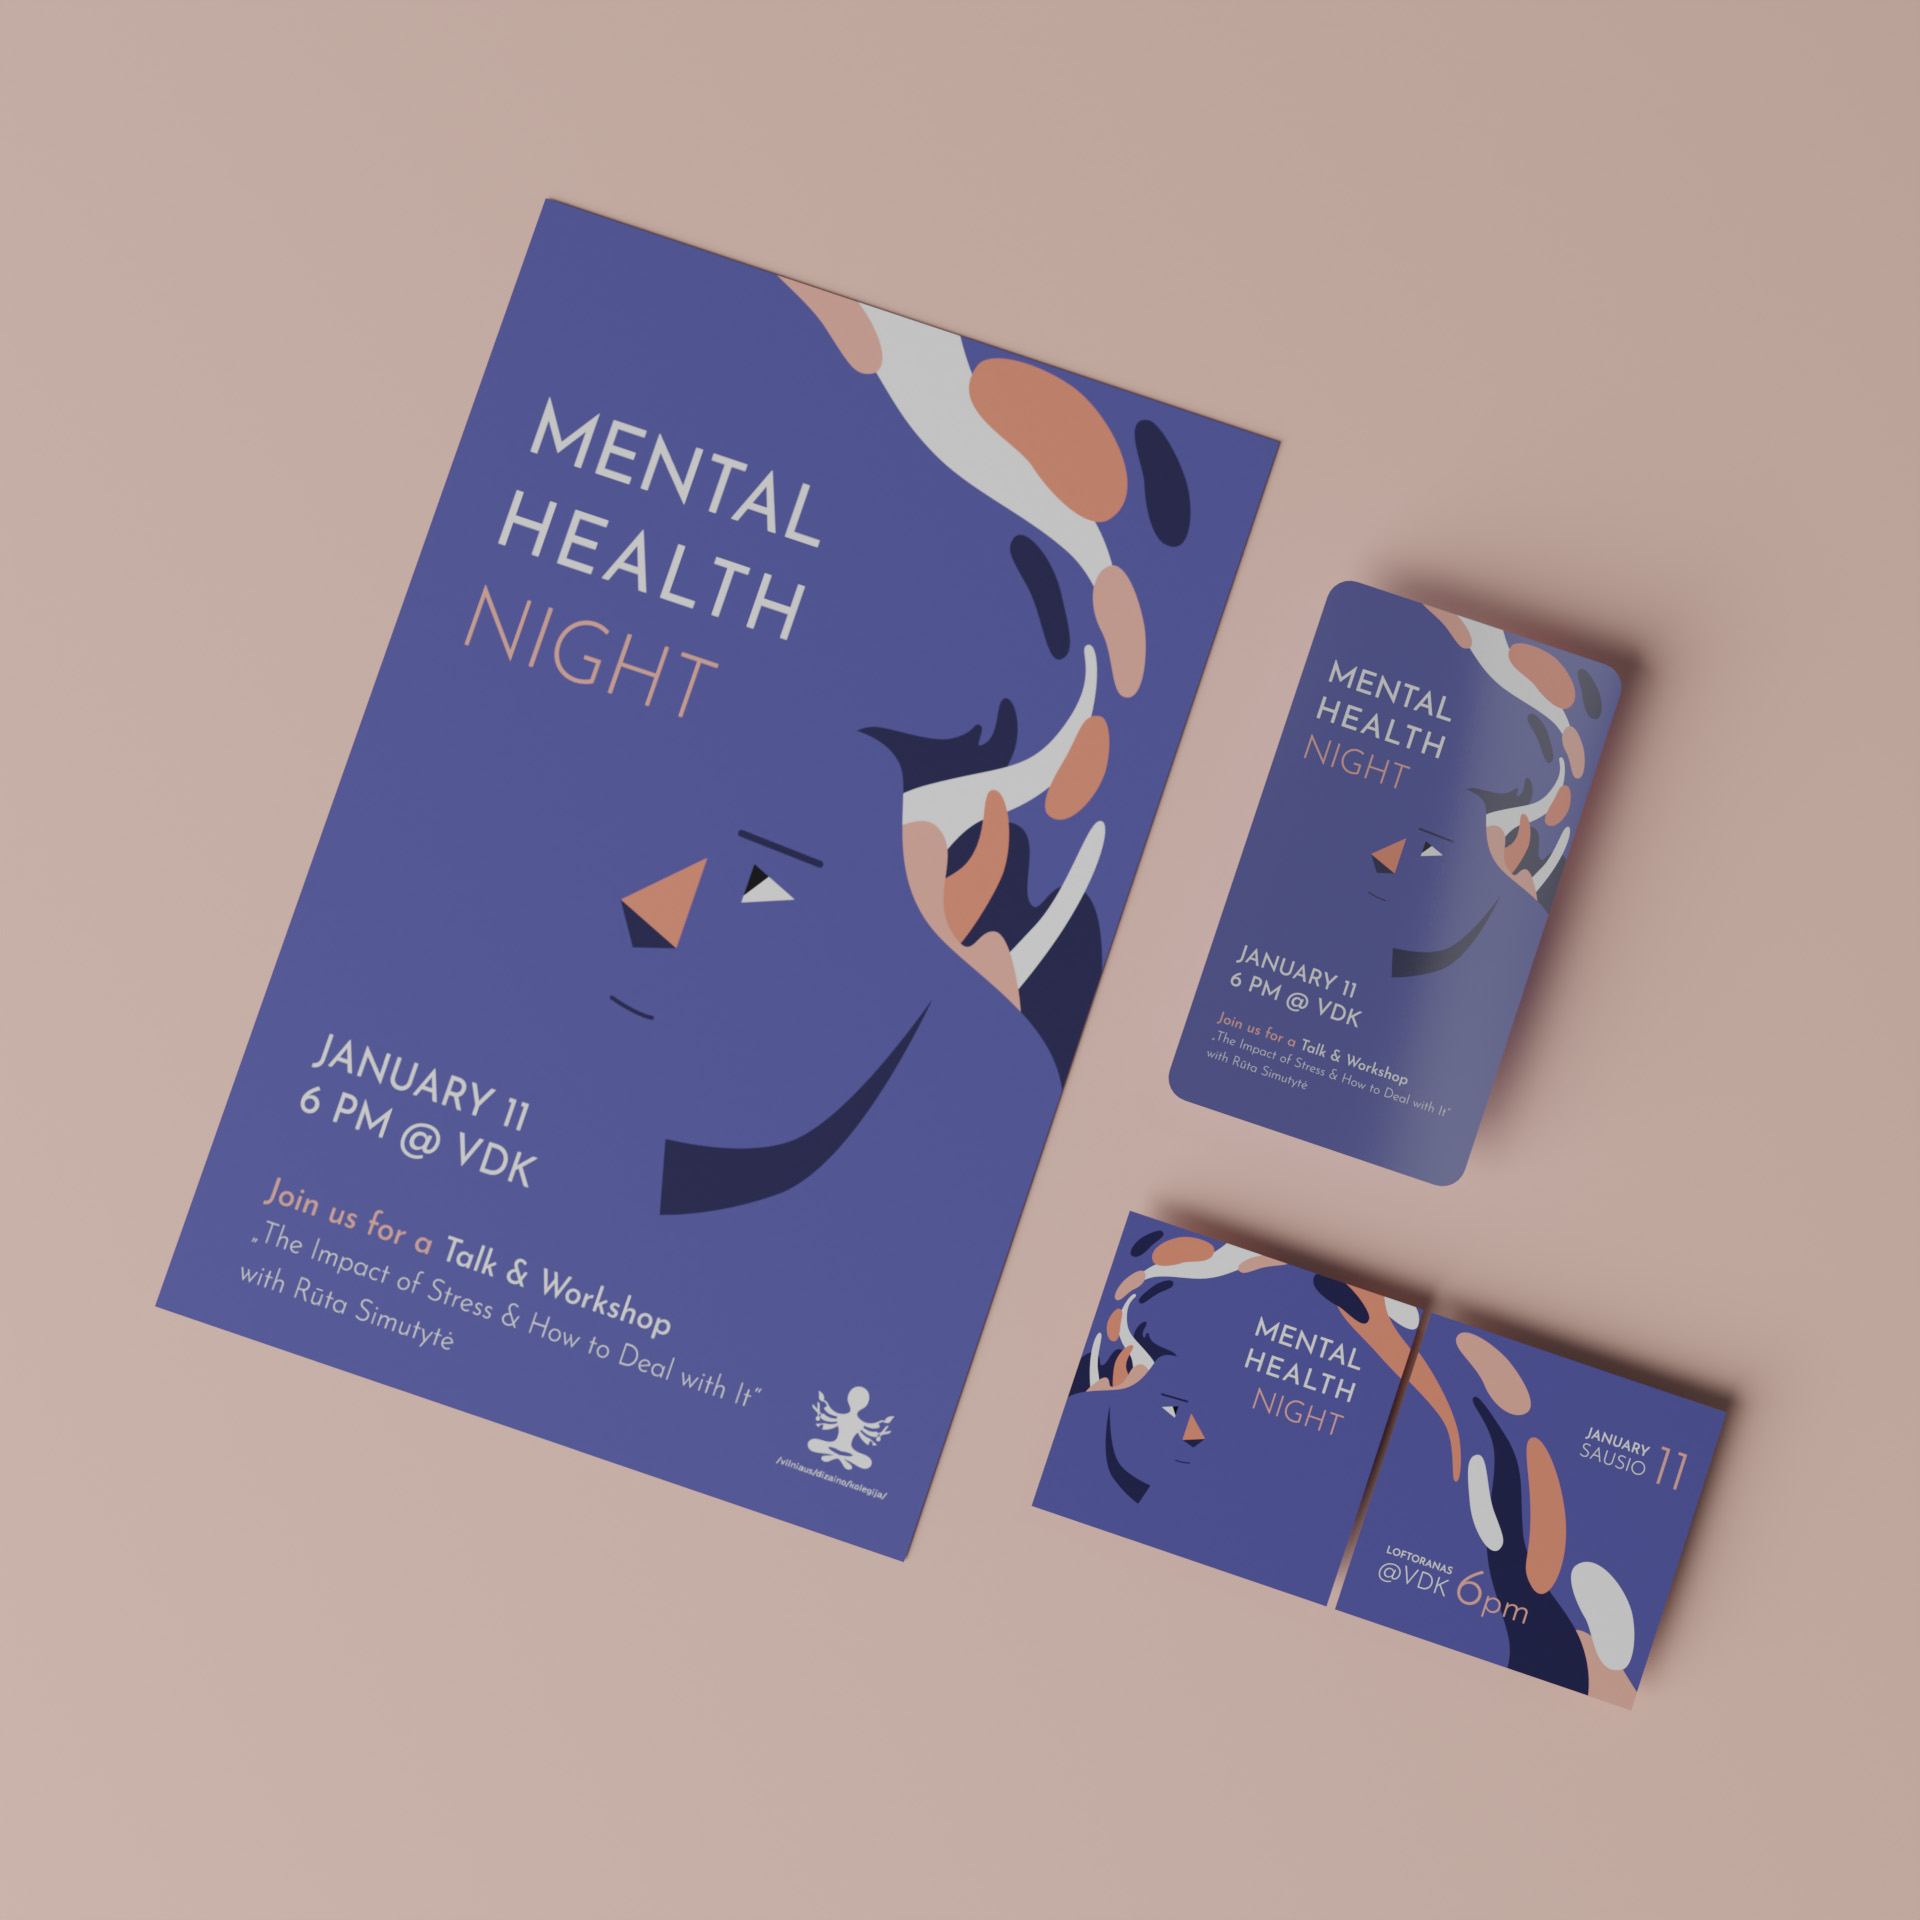 Poster Design “Mental Health Night”